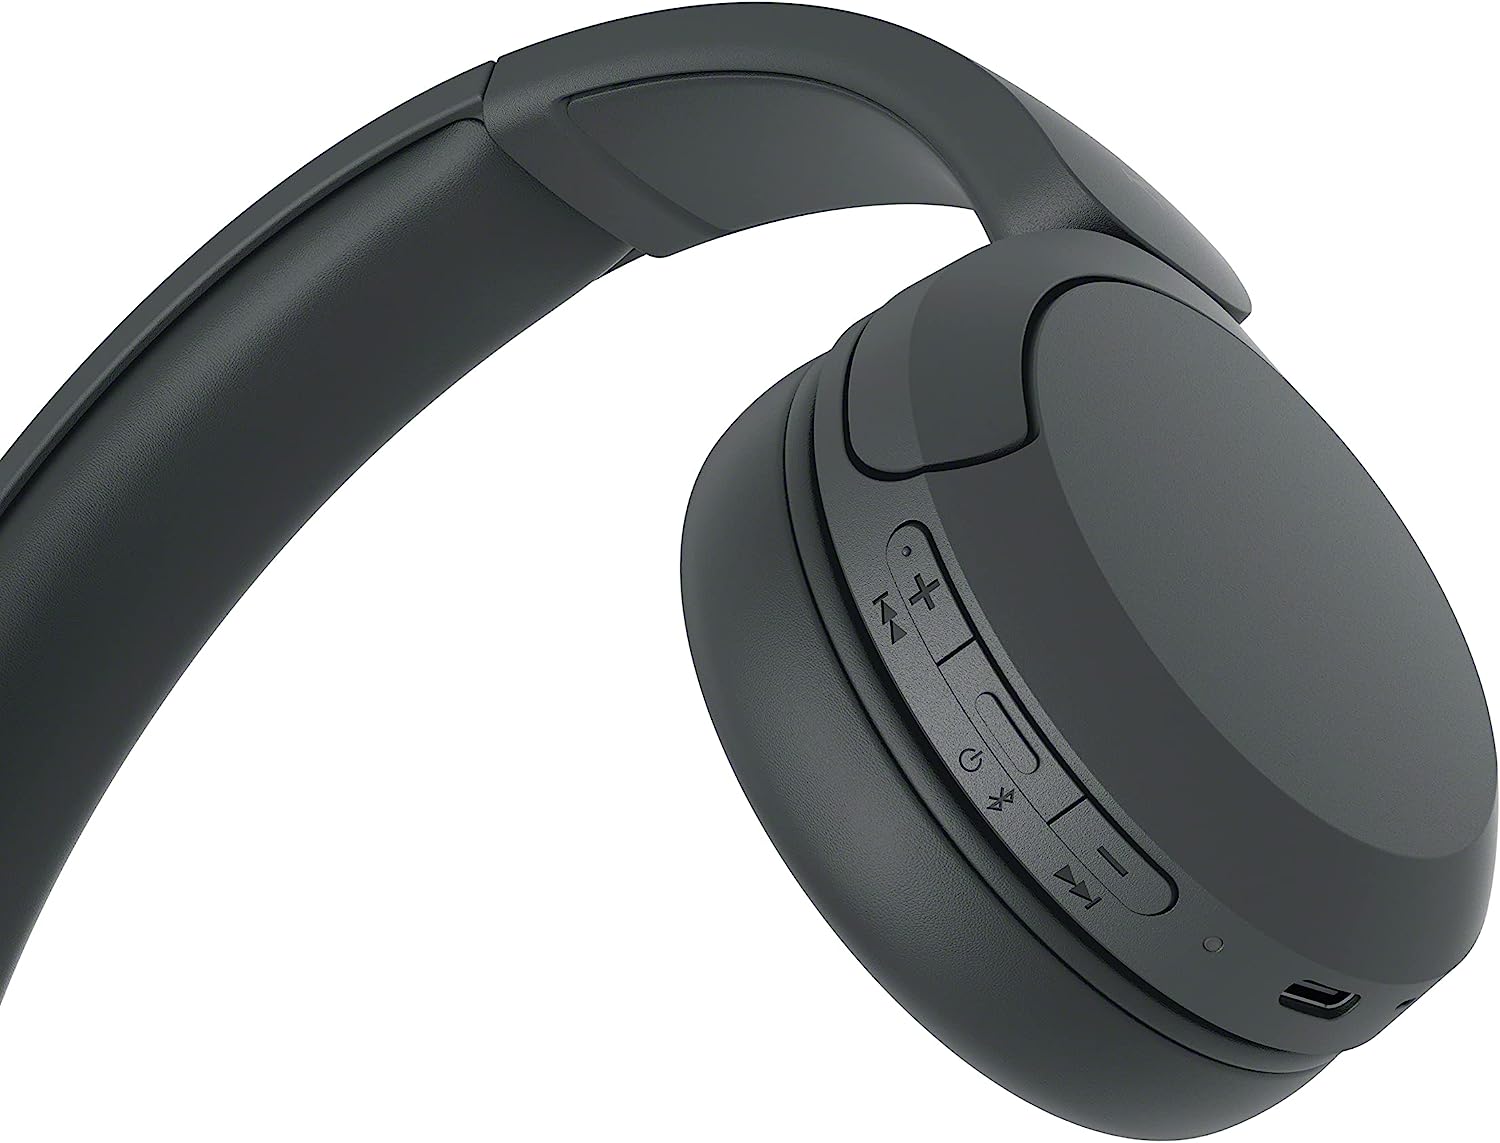 Sony WH-CH520 Over-Ear Wireless Headphones